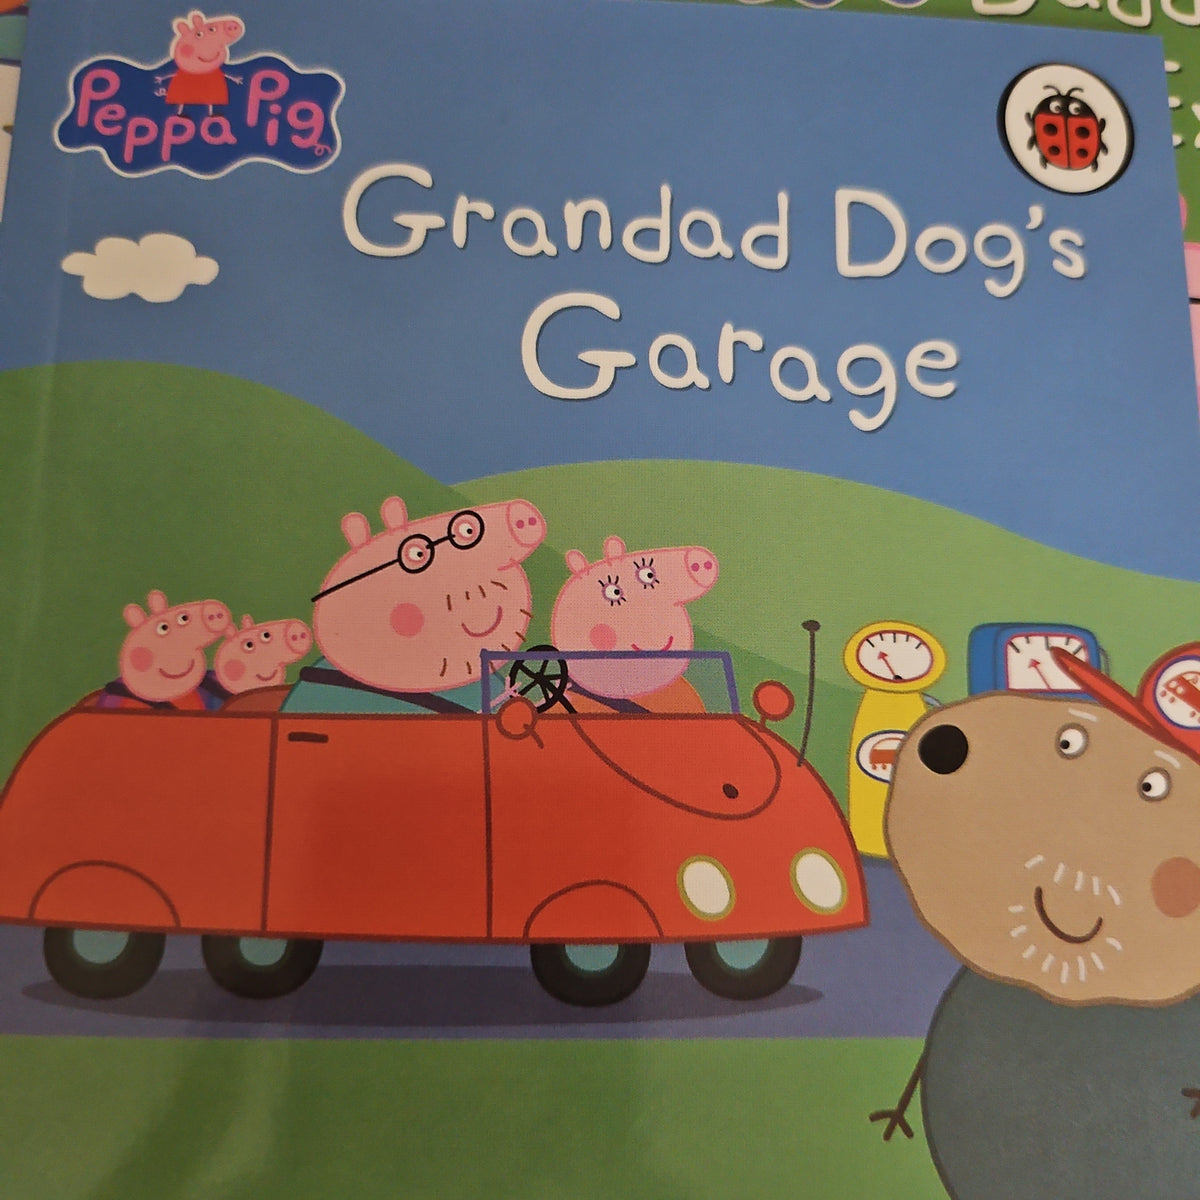 The Amazing Peppa Pig Collection:Grandad Dog's Garage